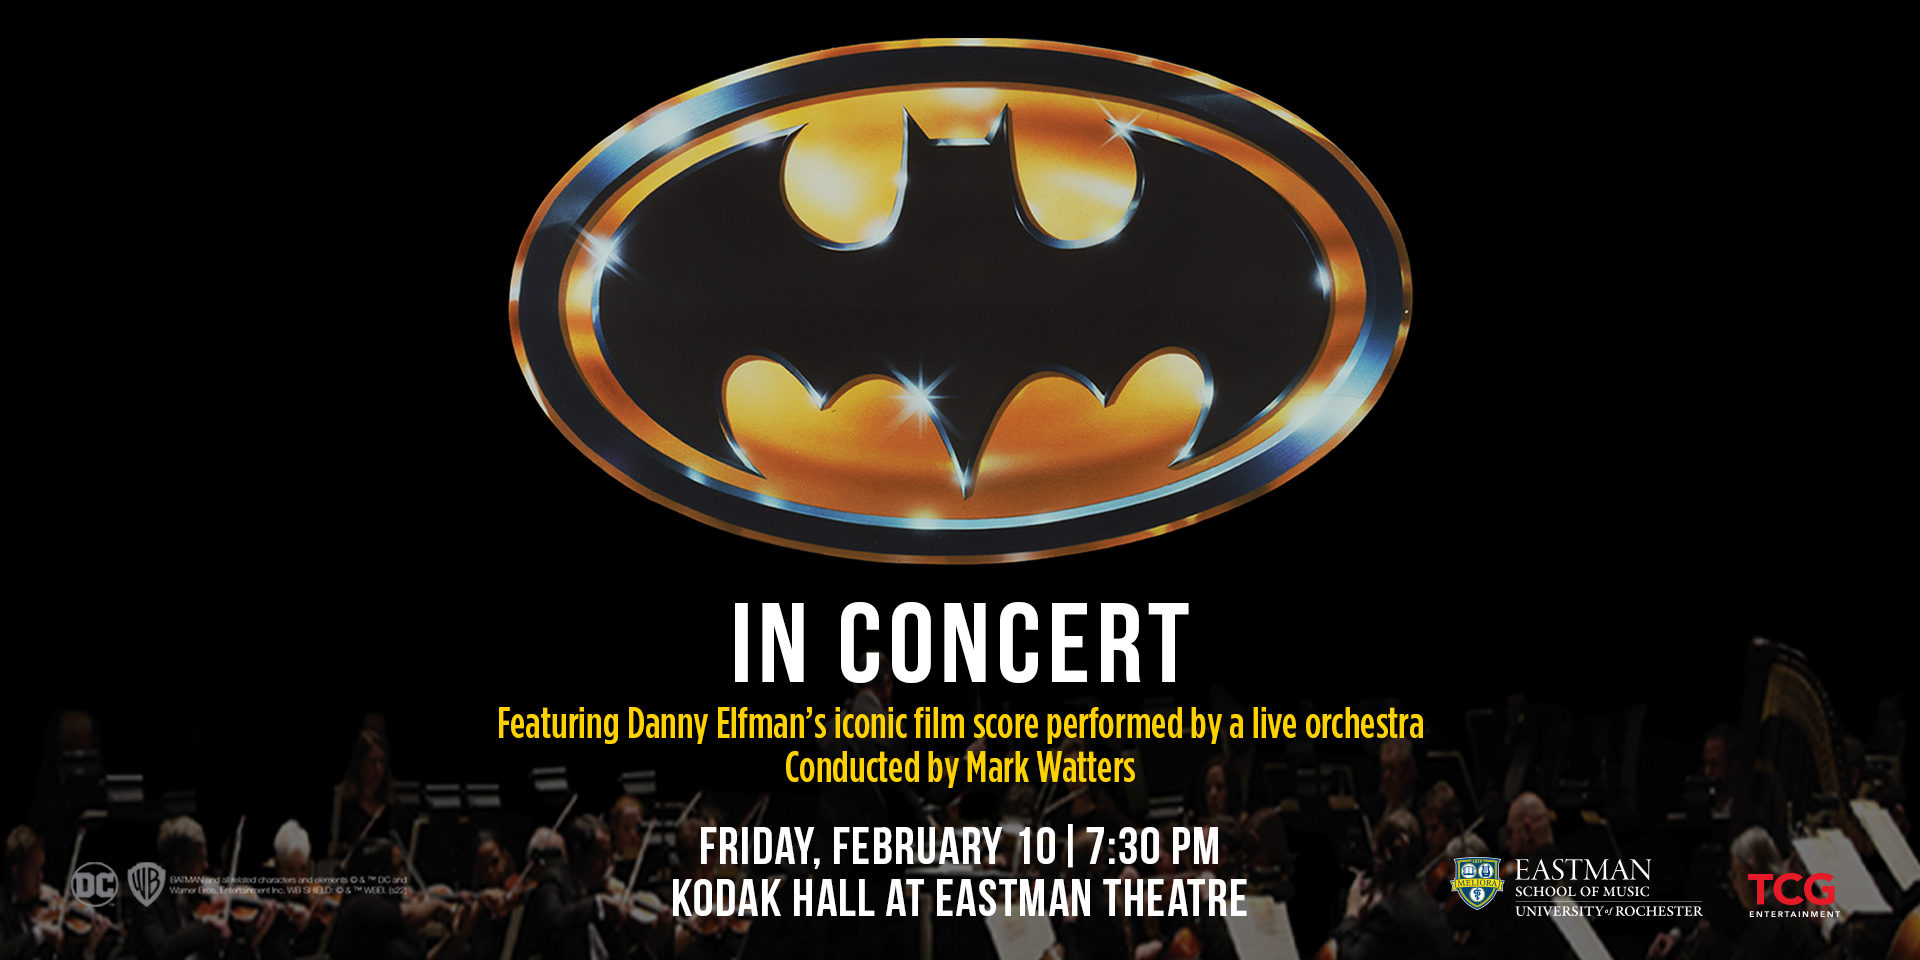 “BATMAN IN CONCERT” will debut at Eastman School of Music on FEB 10